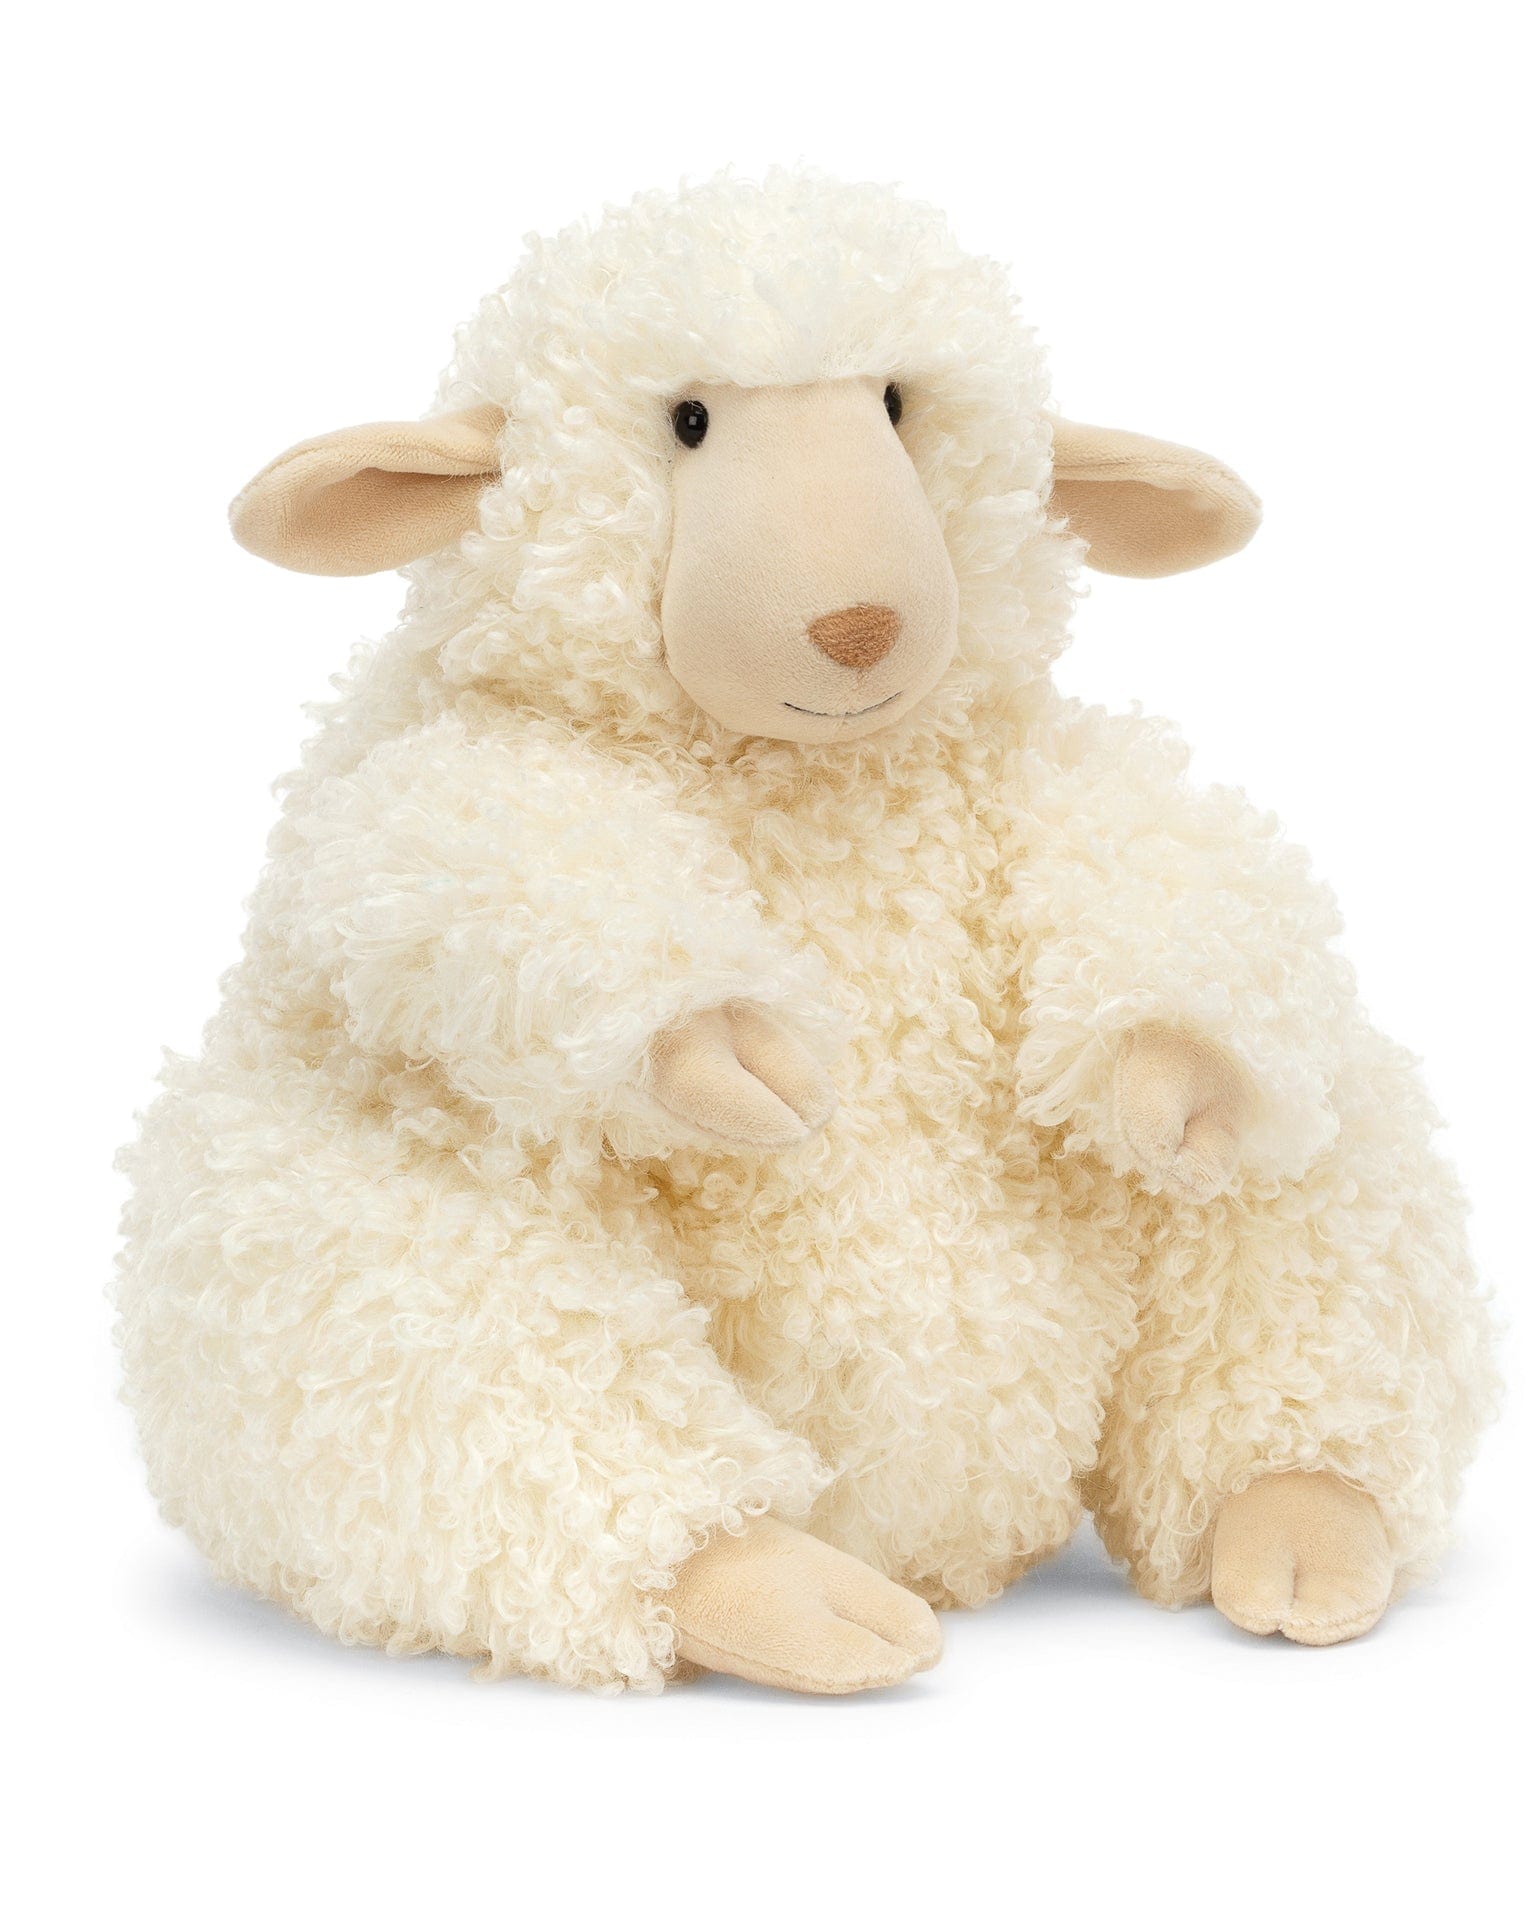 Meadow the Sheep Plush